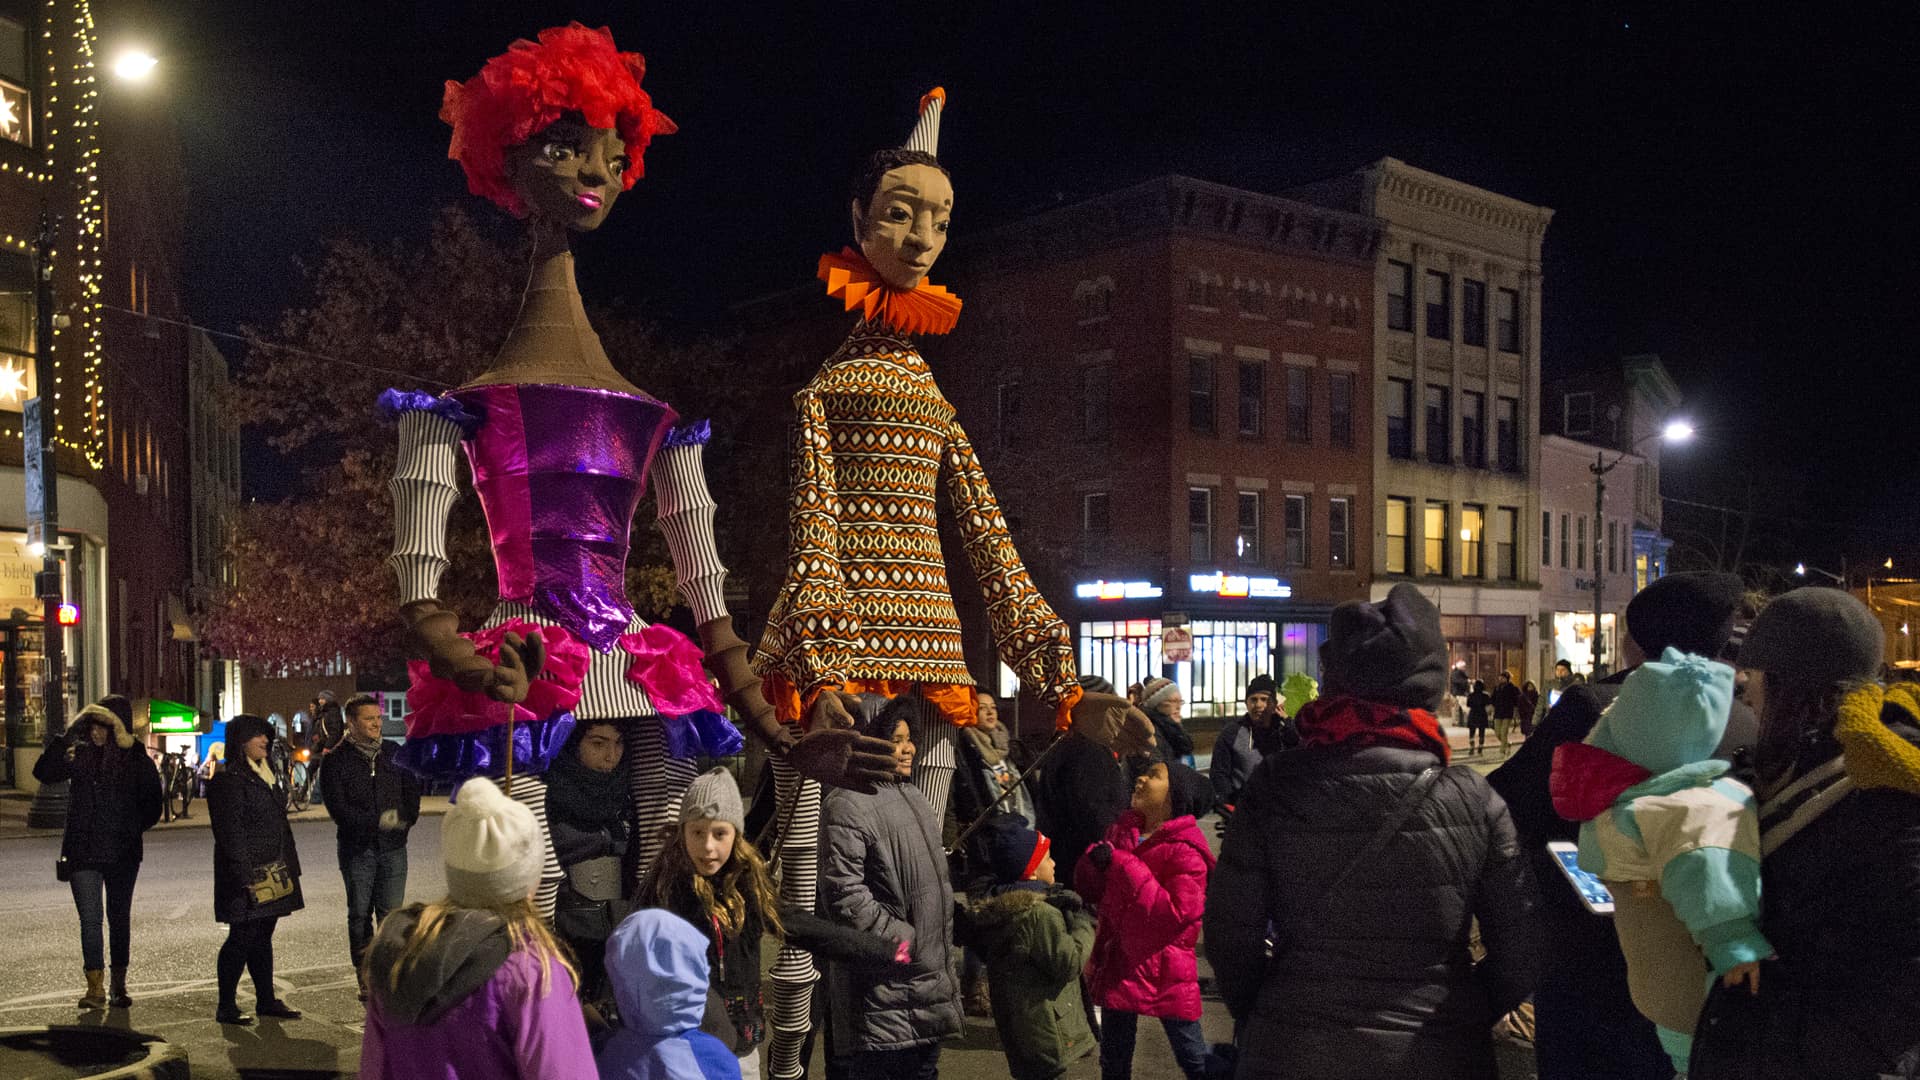 large puppets at parade downtown at night